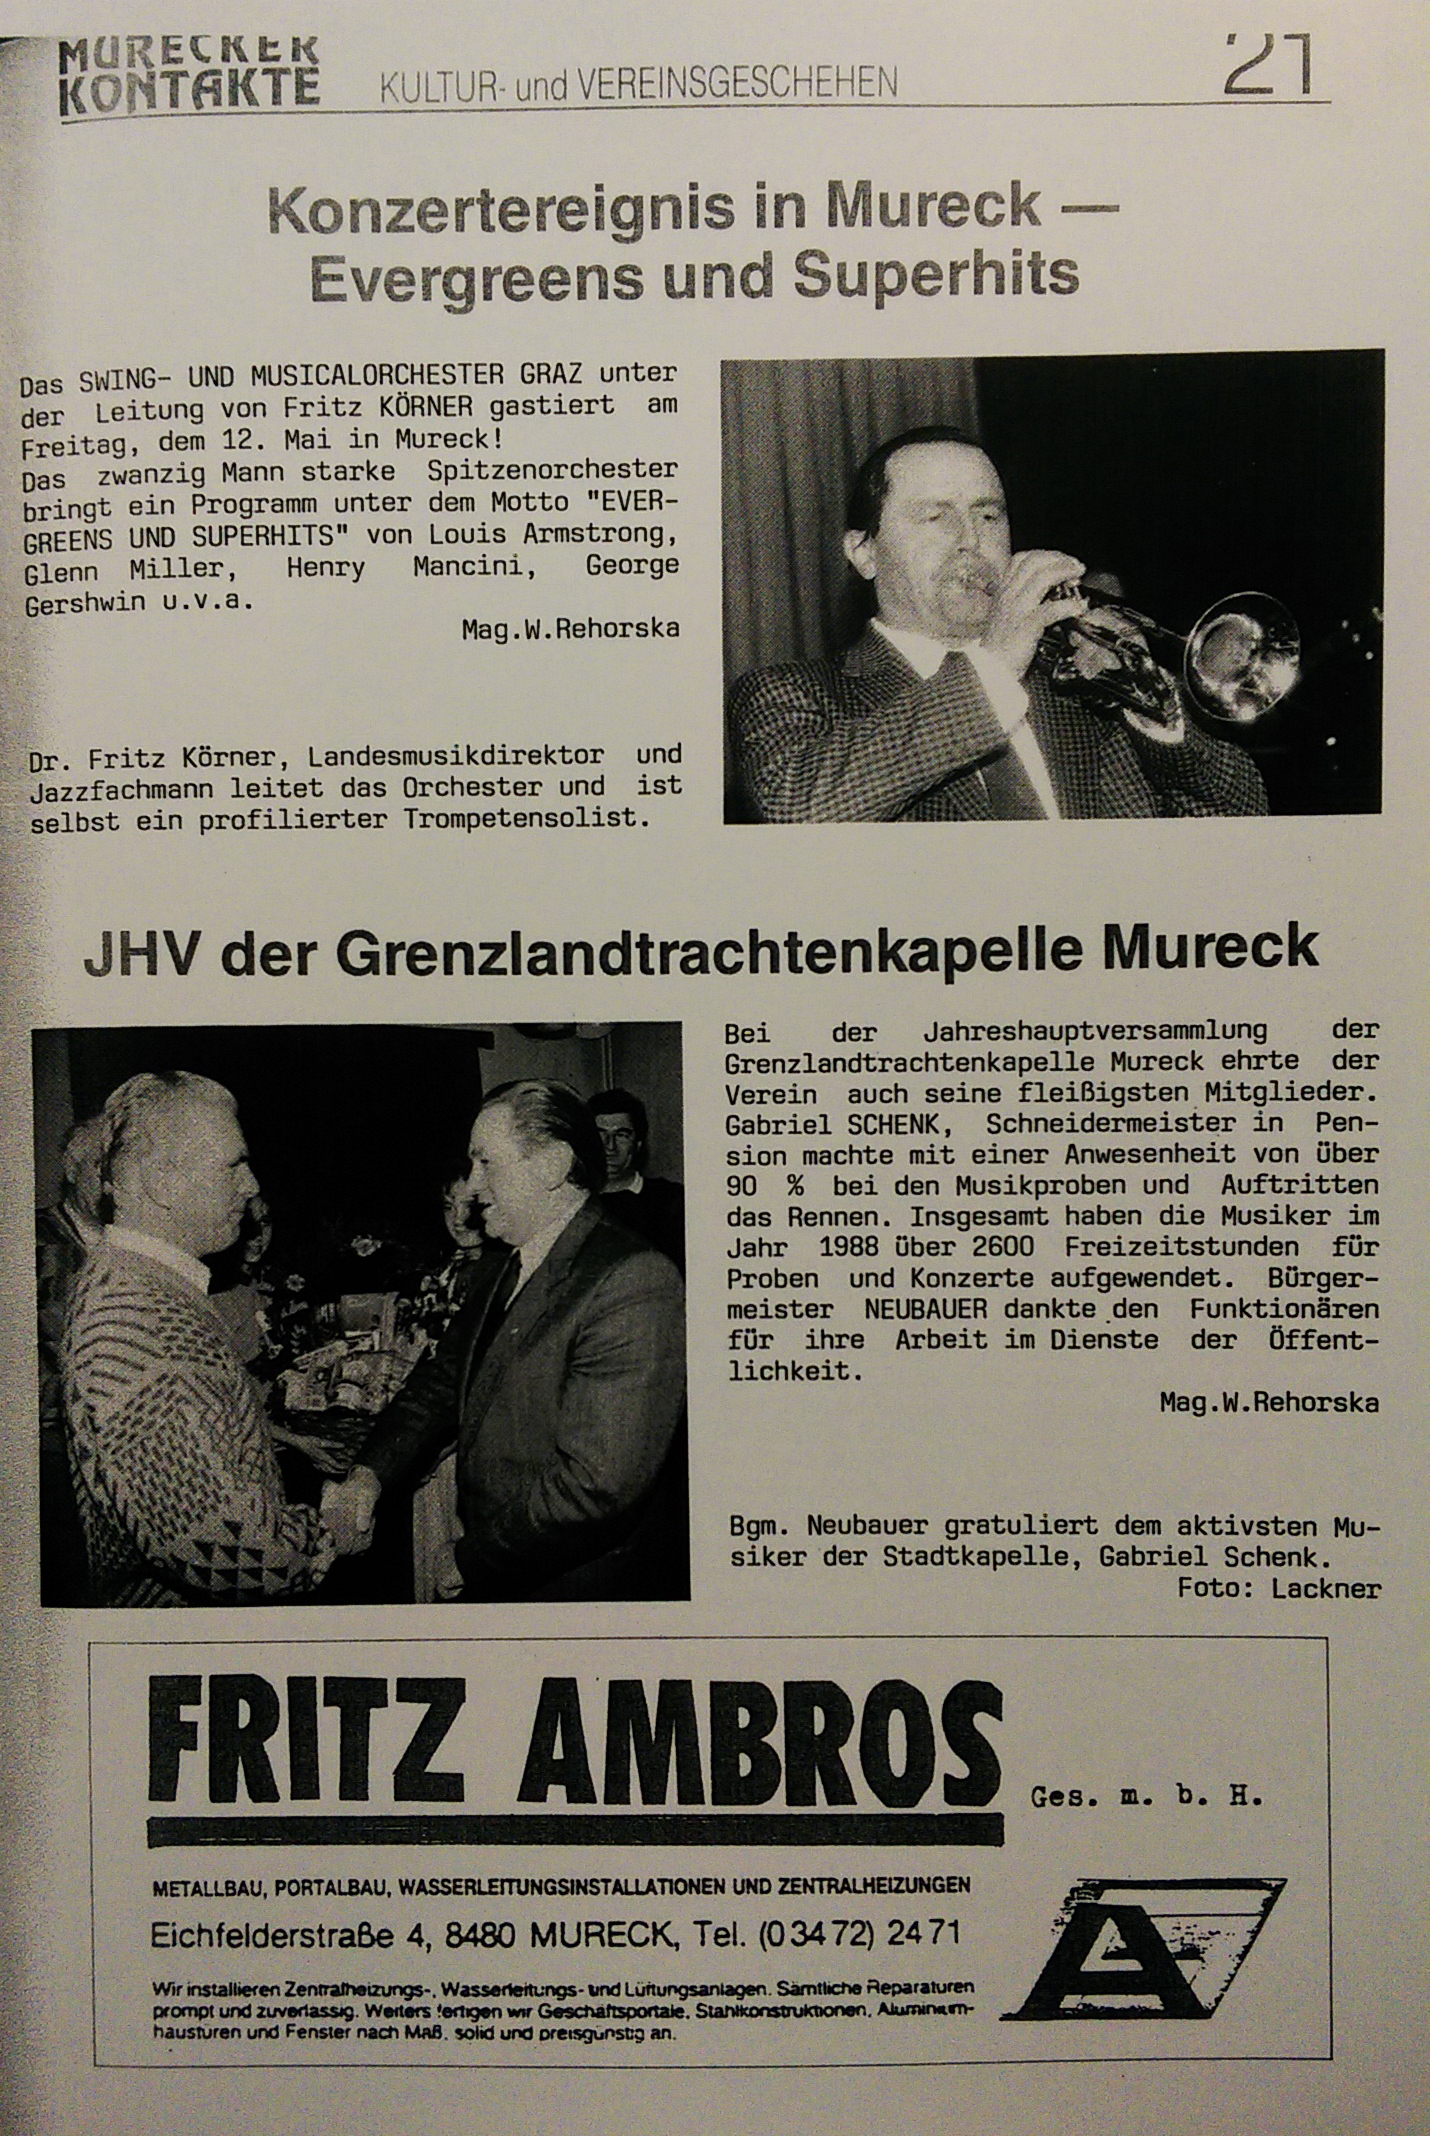 1989 Murecker Kontakte JHV